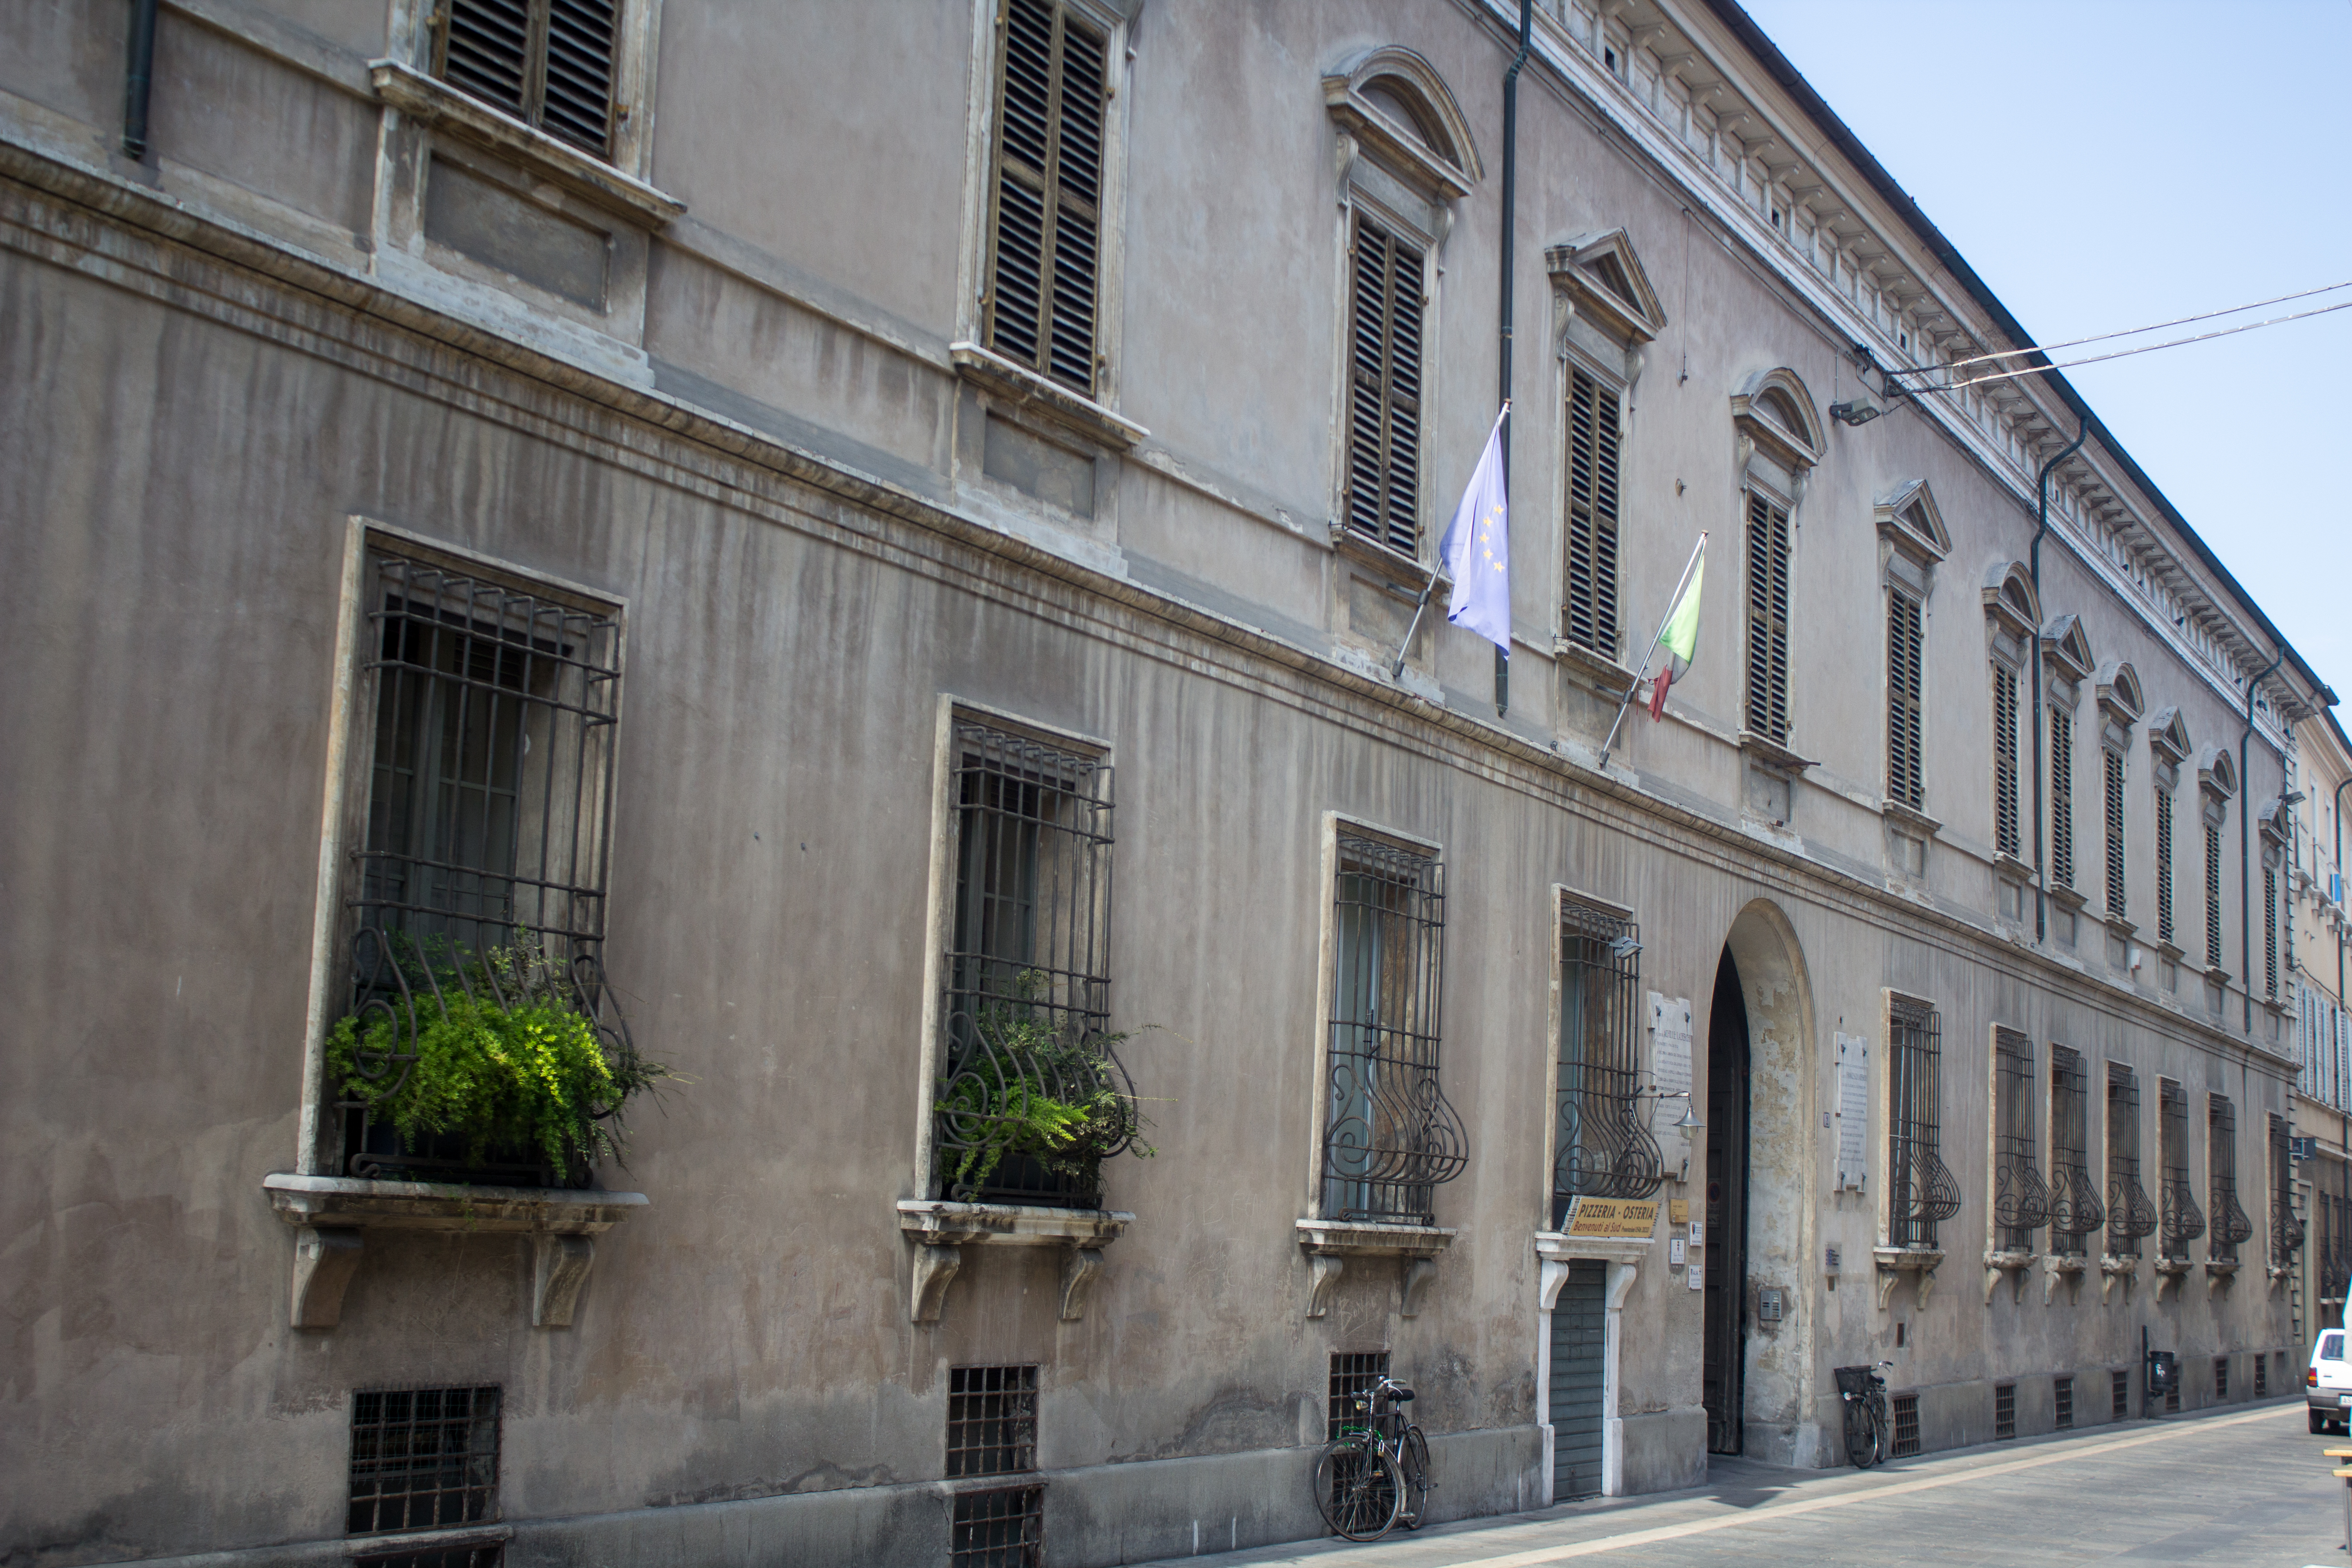 photo: https://upload.wikimedia.org/wikipedia/commons/a/ad/Palazzo_Laderchi_a_Faenza.jpg